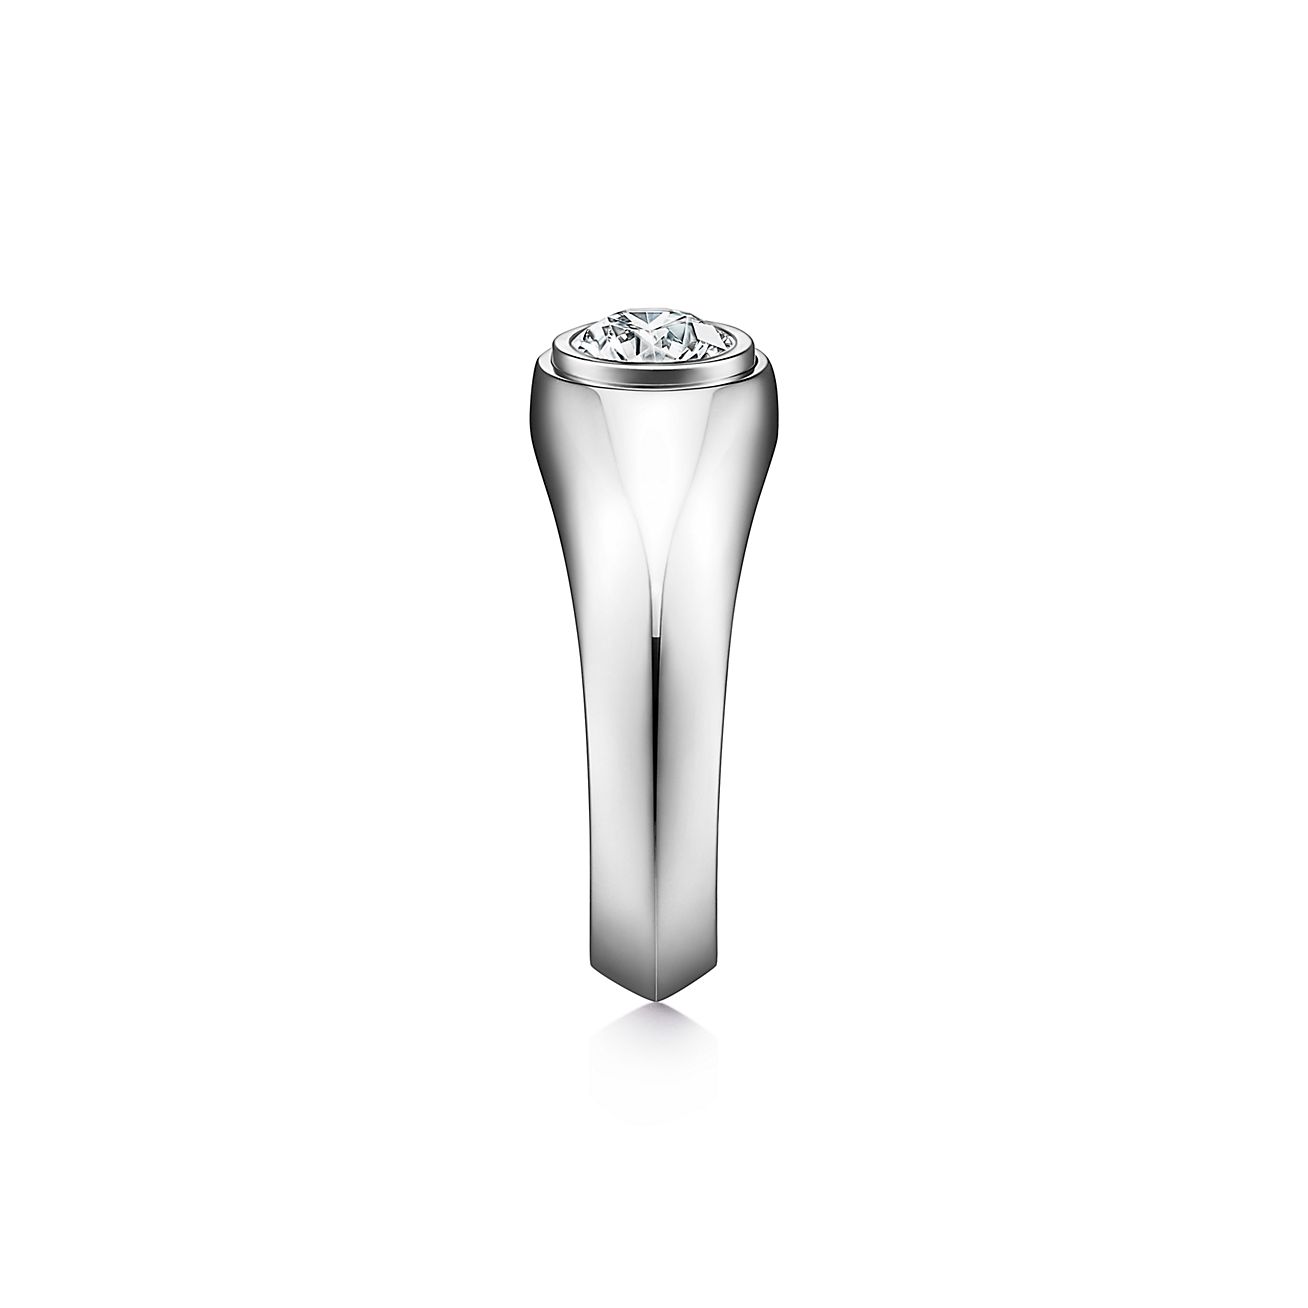 Diamond Wedding Ring for Gents at best price in New Delhi by Gupta Diamonds  | ID: 3433806562